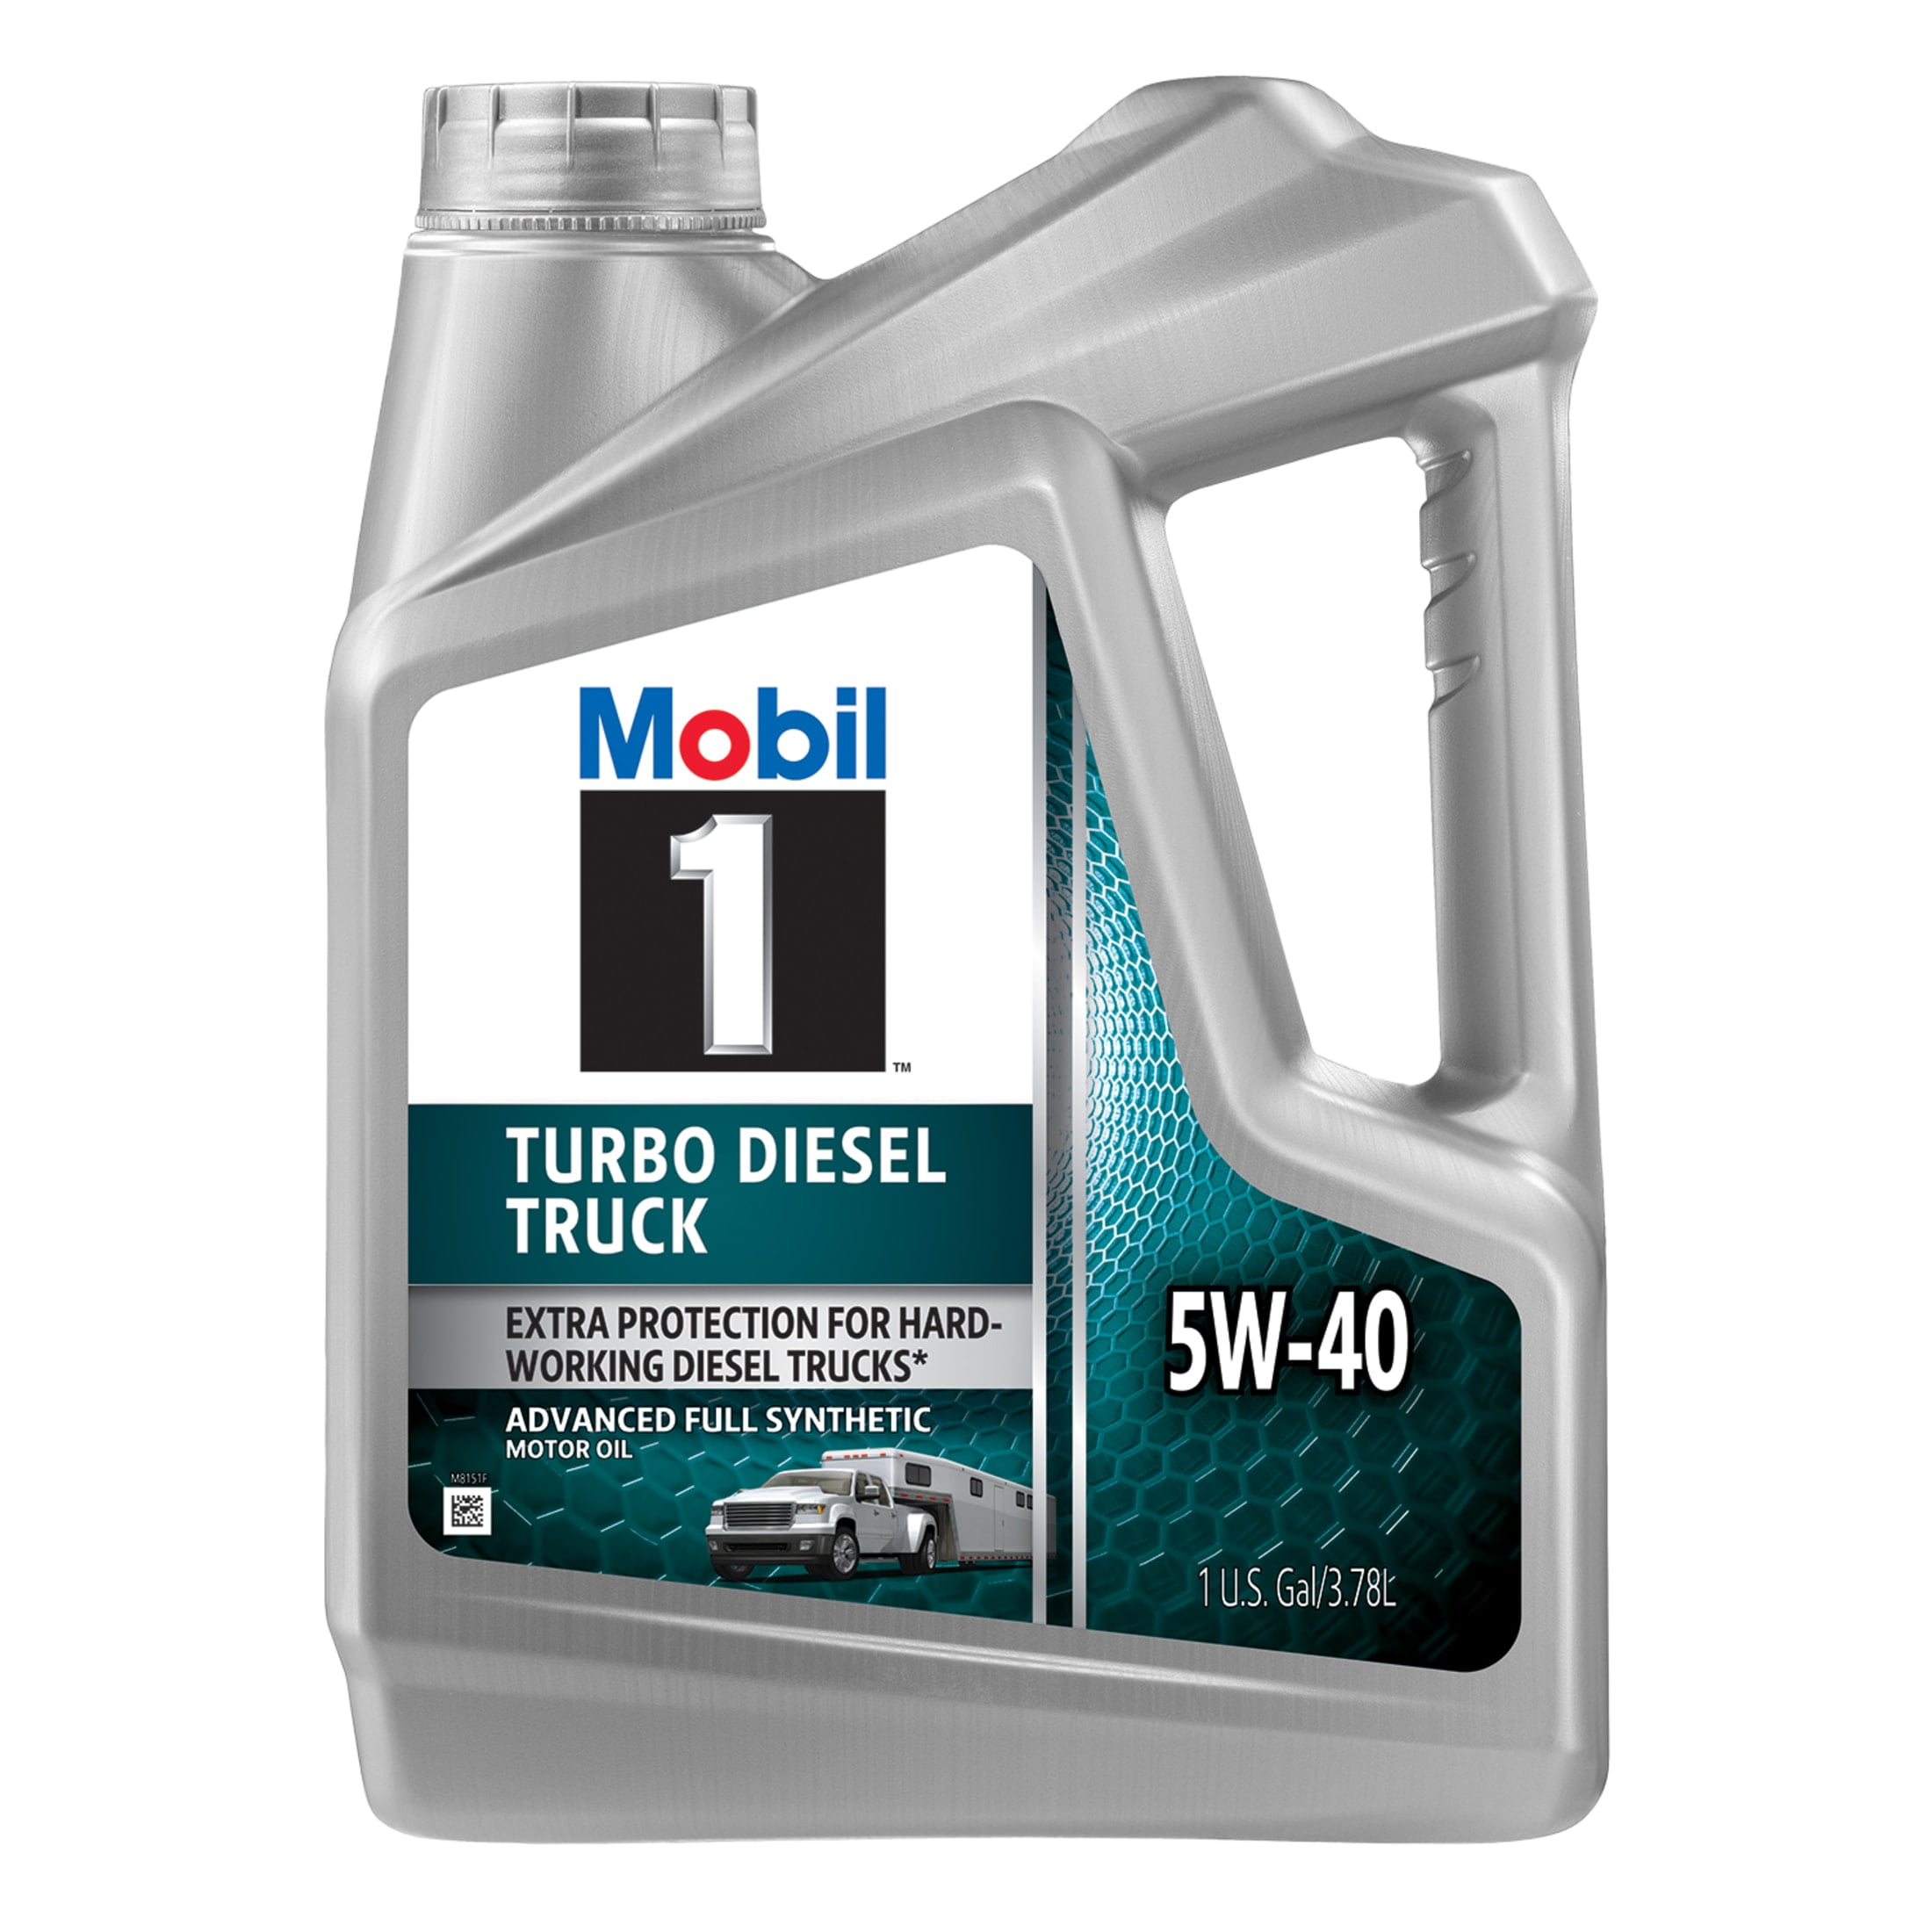 Mobil 1 5W-40 Turbo Diesel Truck Motor Oil - 1 Gallon